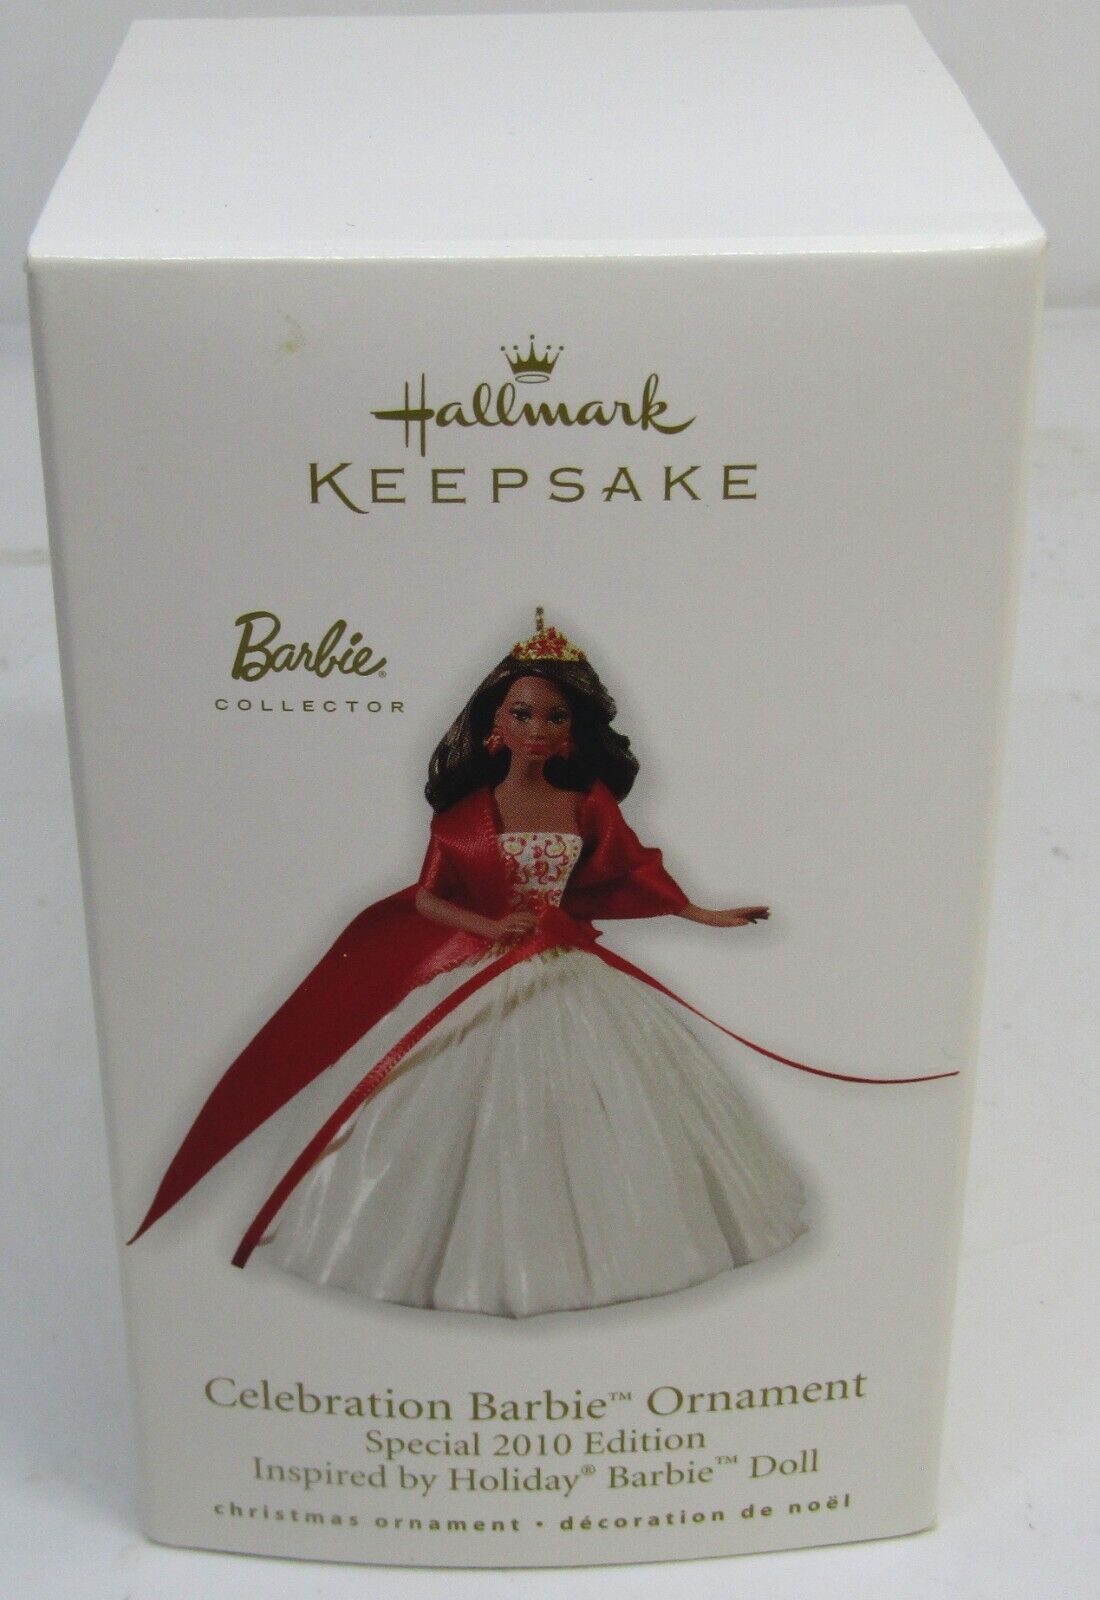 Hallmark Keepsake 2010, Barbie Collector Celebrations Barbie, Ornament.